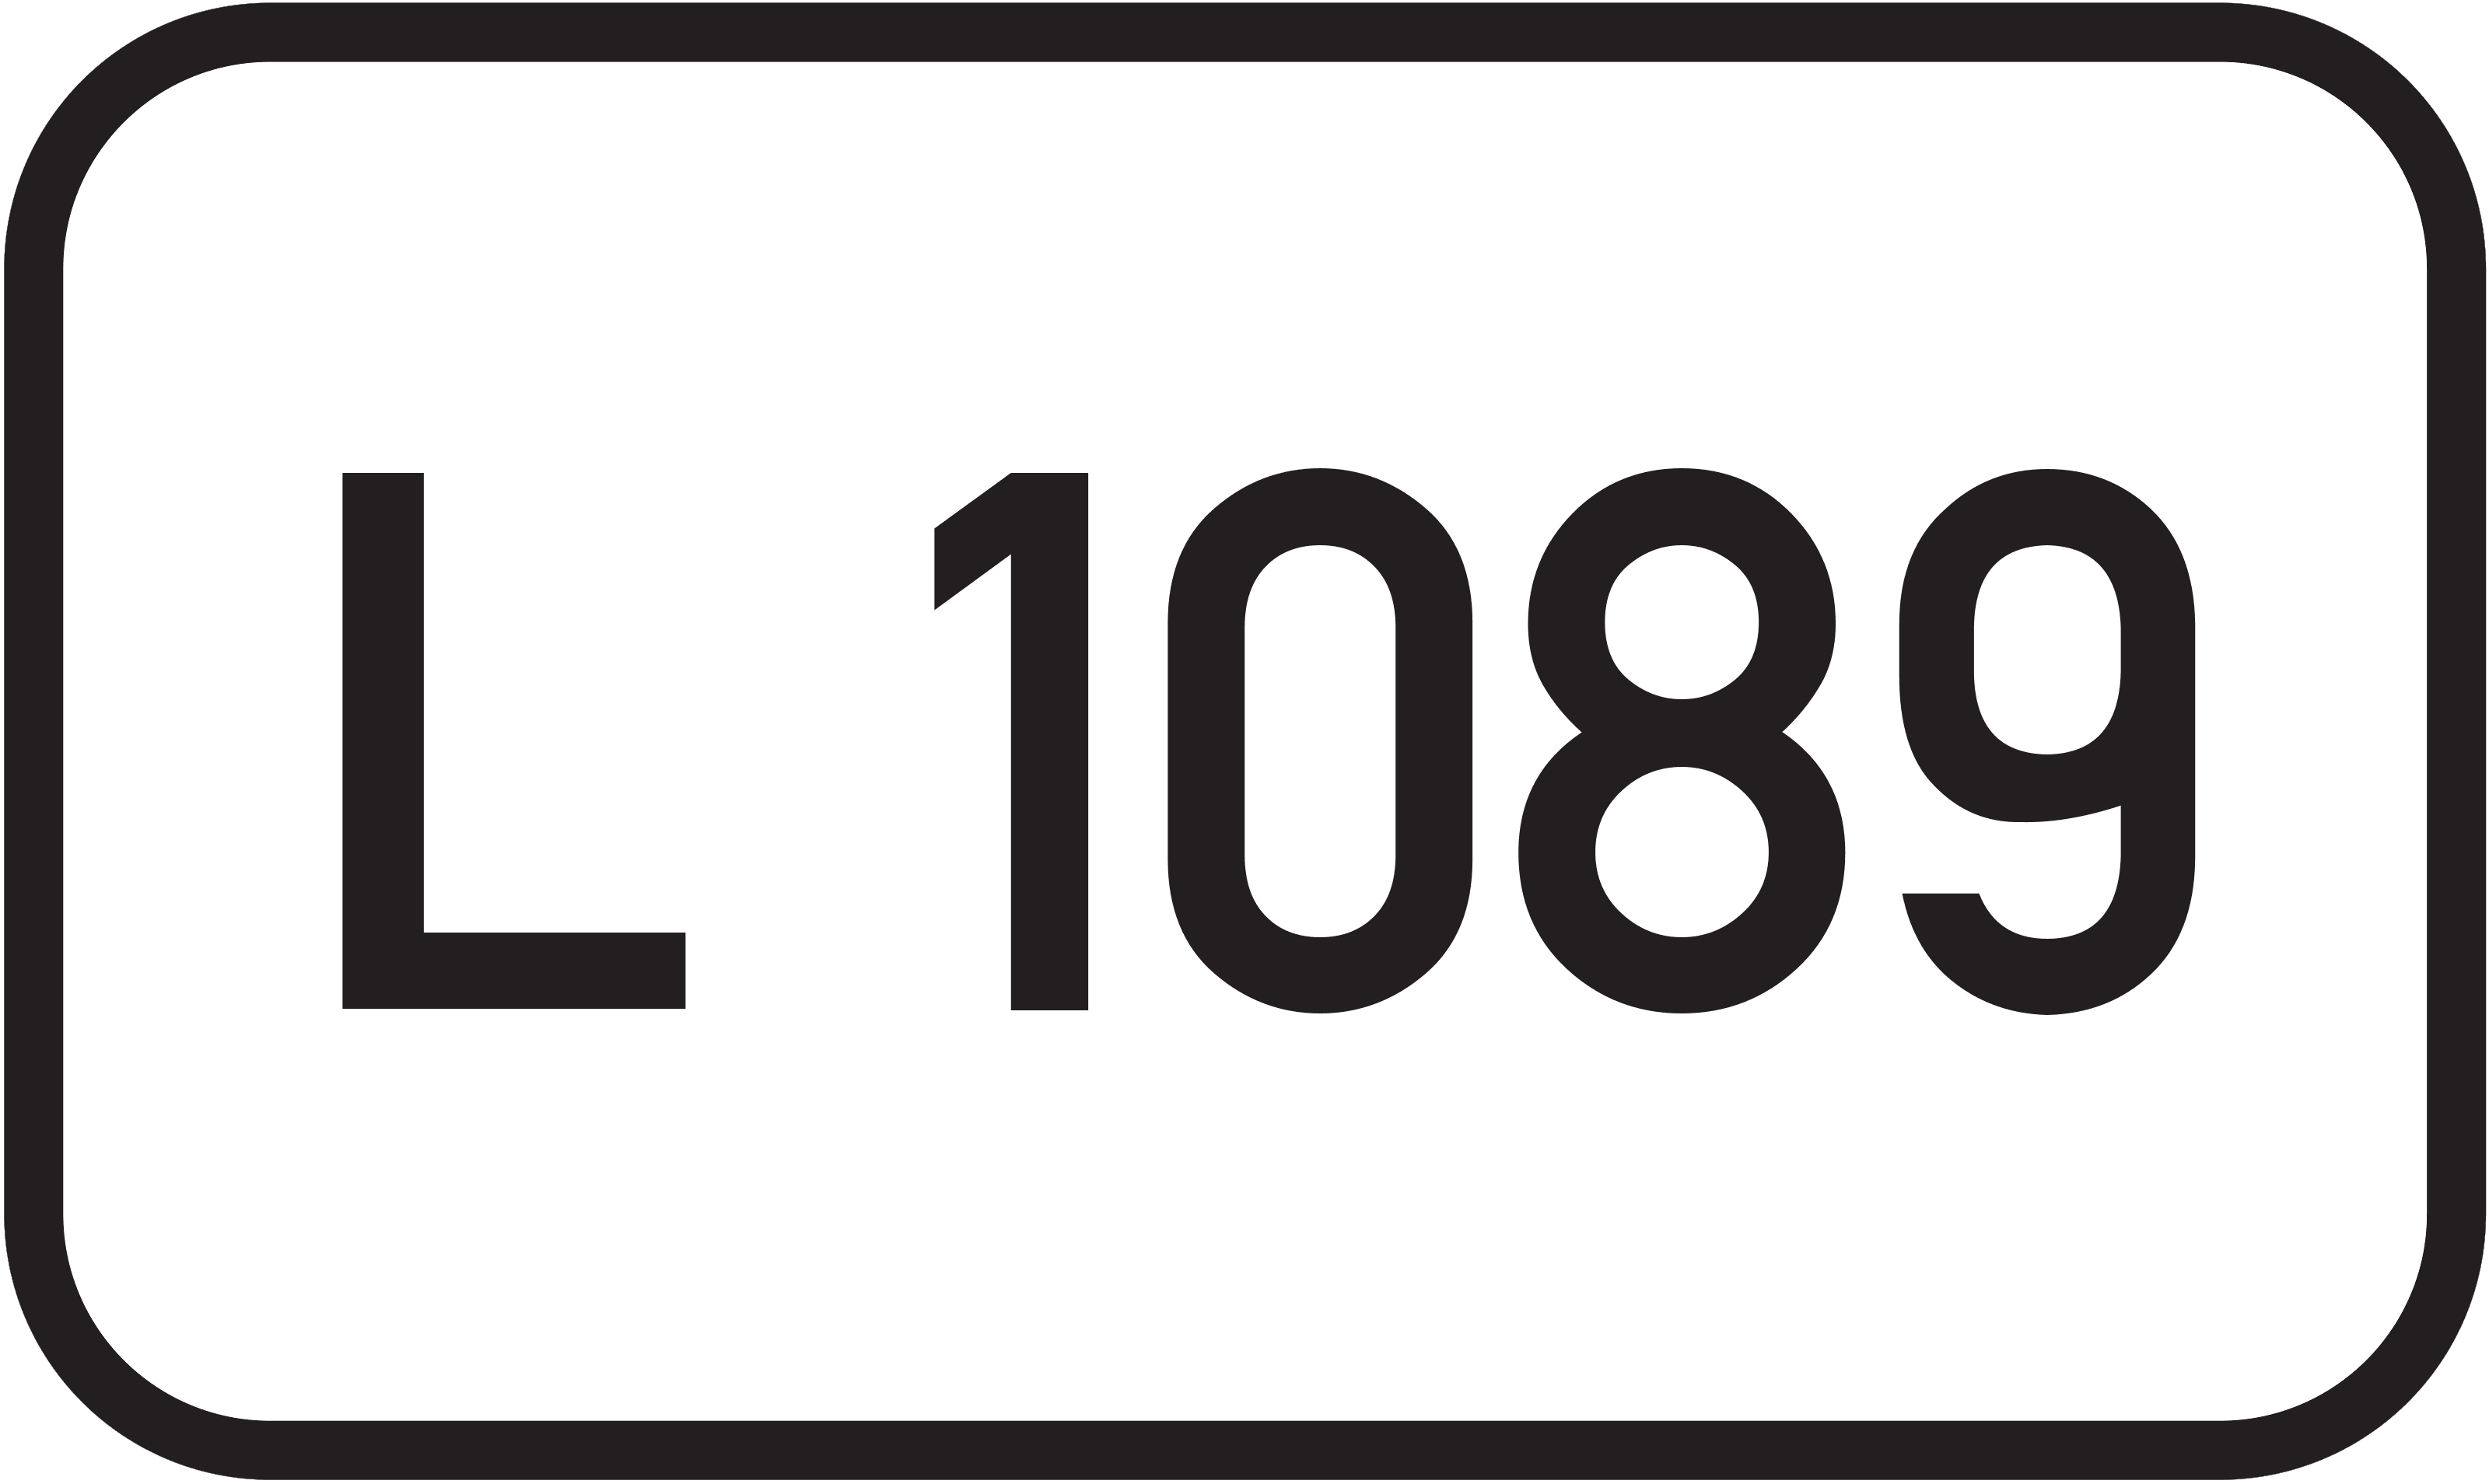 Straßenschild Landesstraße L 1089